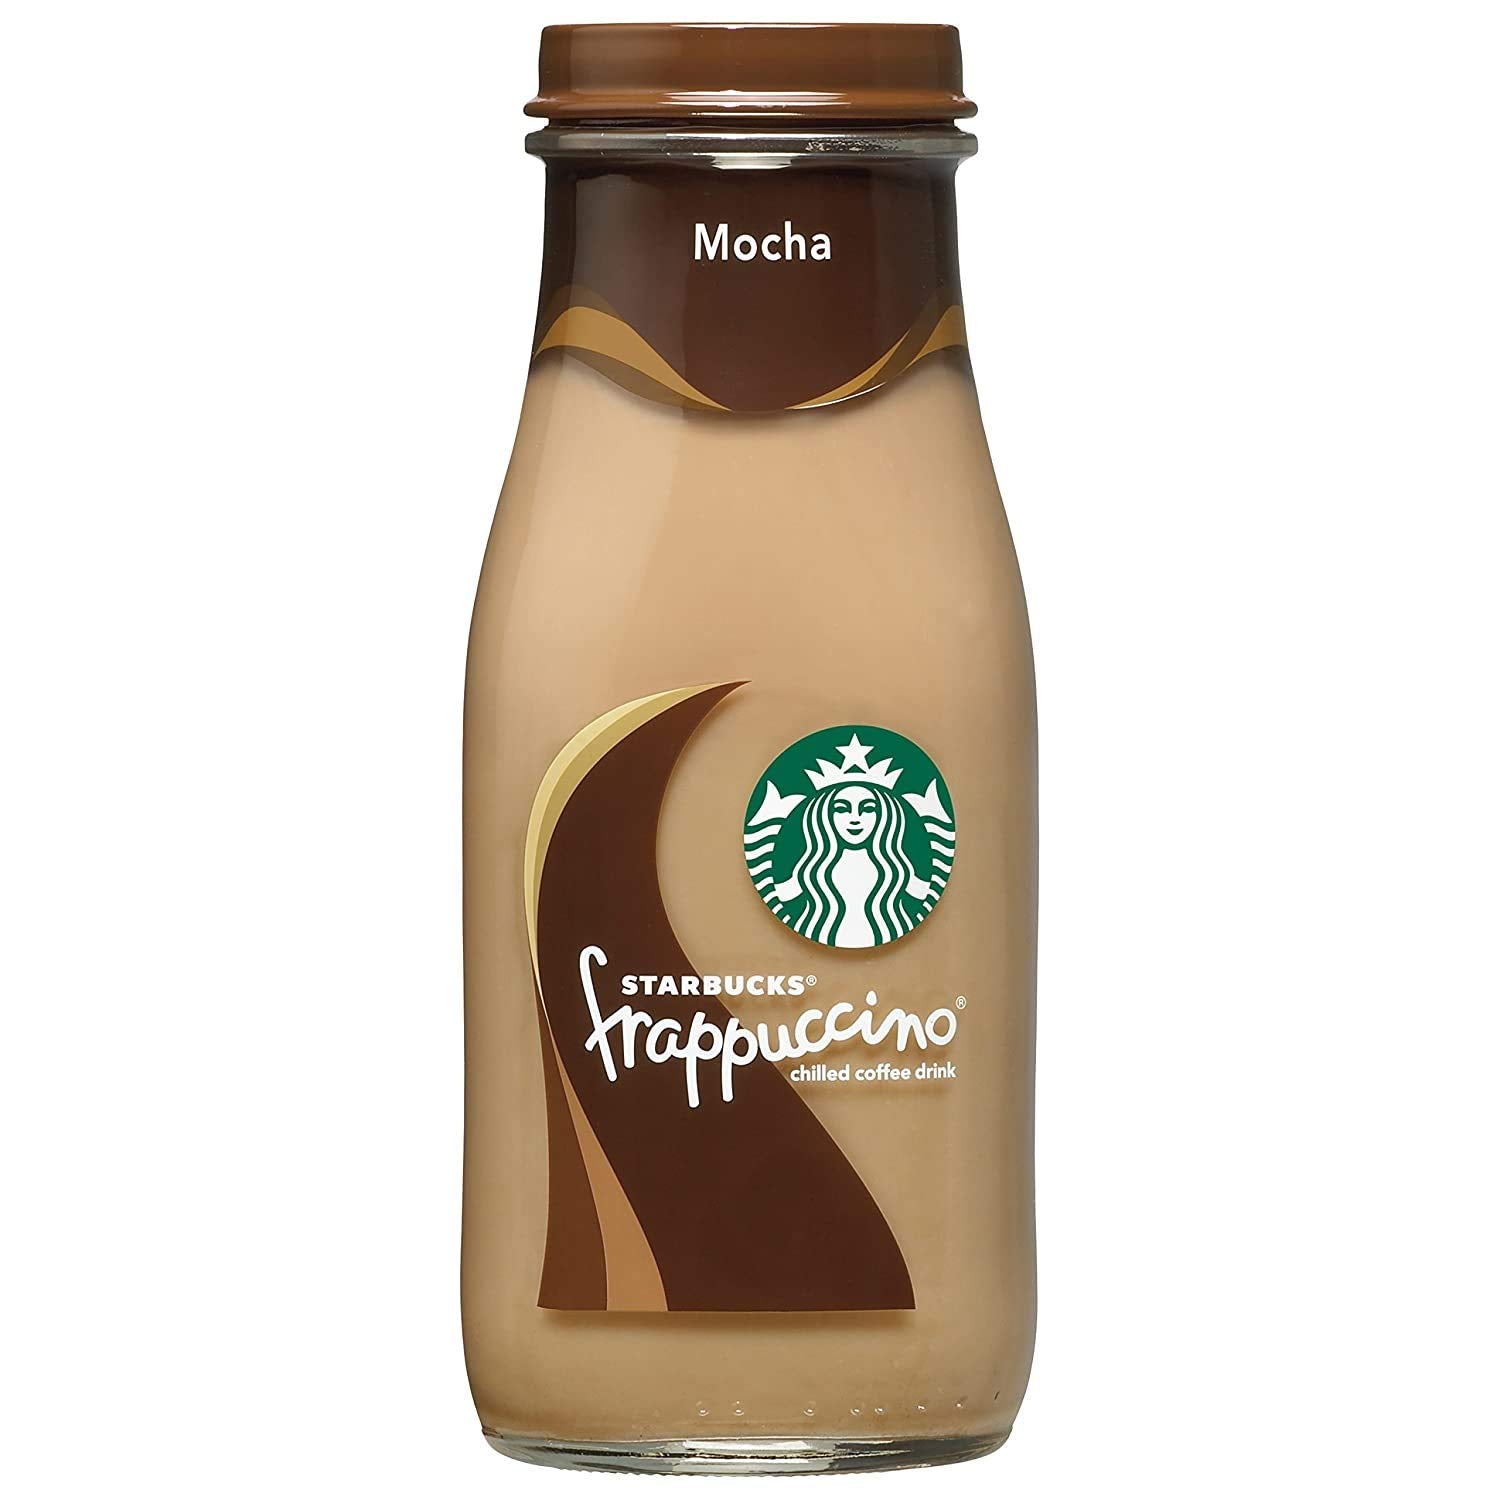 Starbucks Frappuccino Mocha Coffee 9.5 Fl Oz Bottle